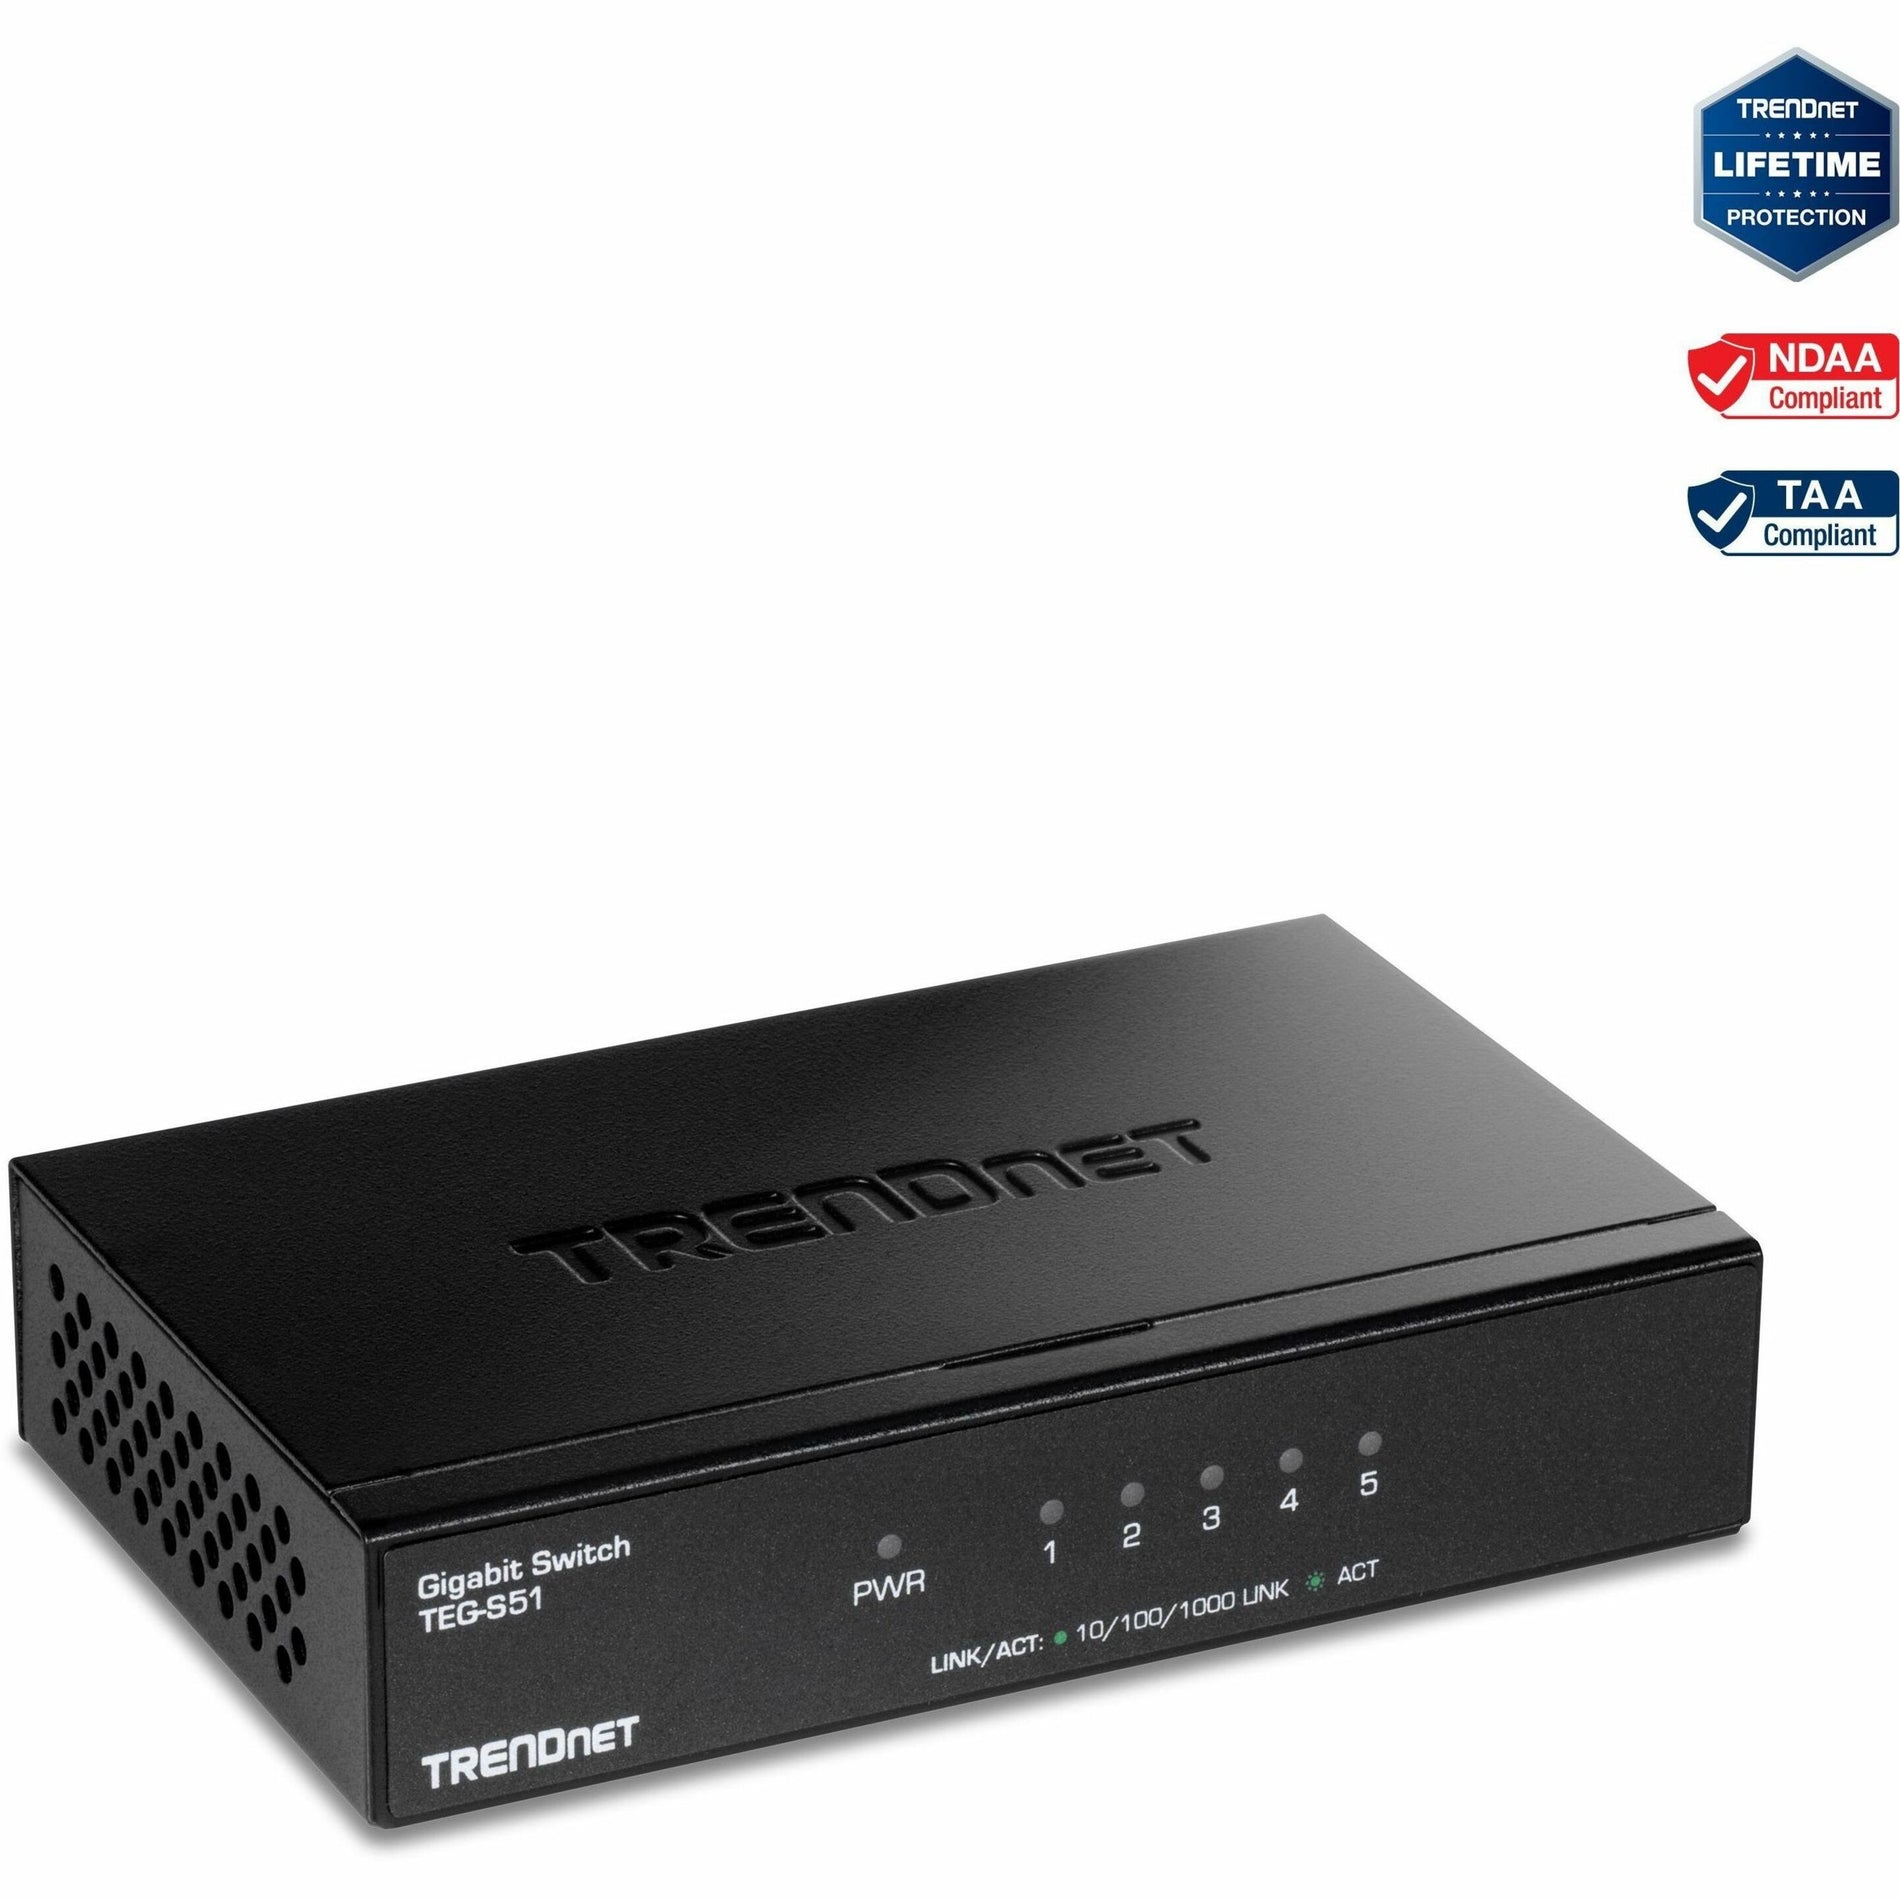 TRENDnet TEG-S51 5-Port Gigabit Desktop Switch, TAA Compliant, Student, Gaming, Multimedia, Business